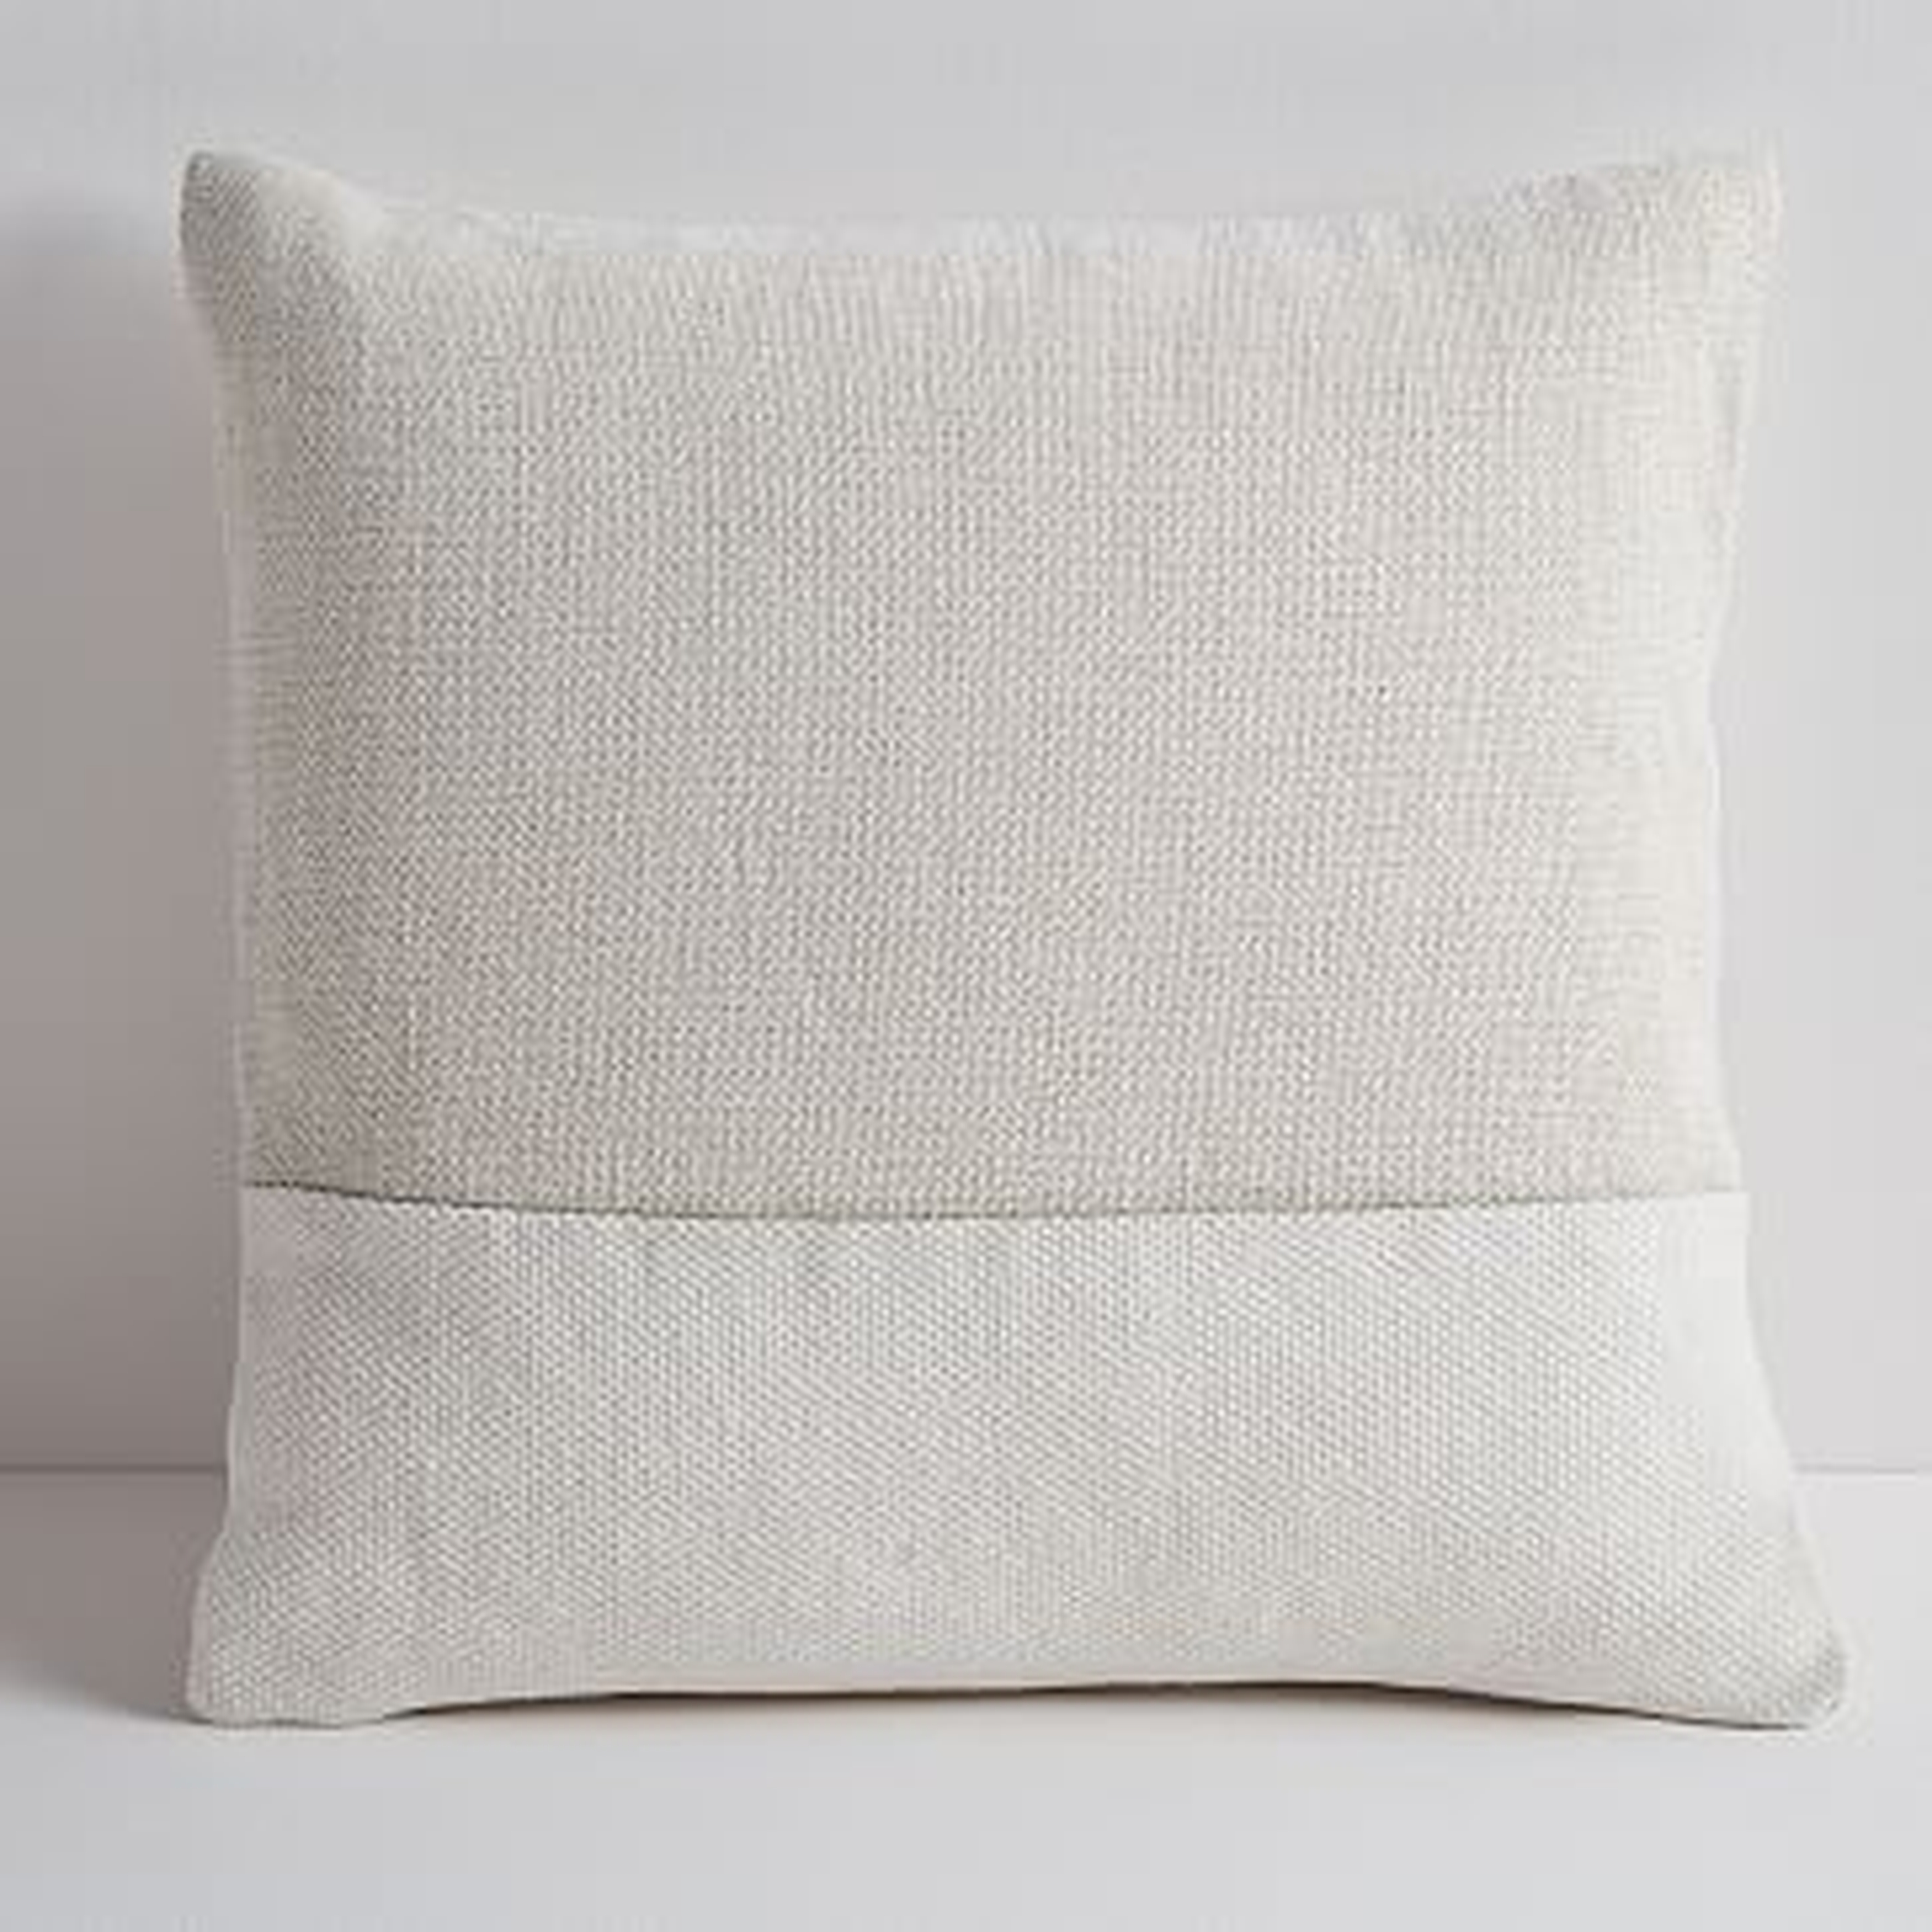 Cotton Canvas Pillow Cover, 18" sq, Stone White - West Elm